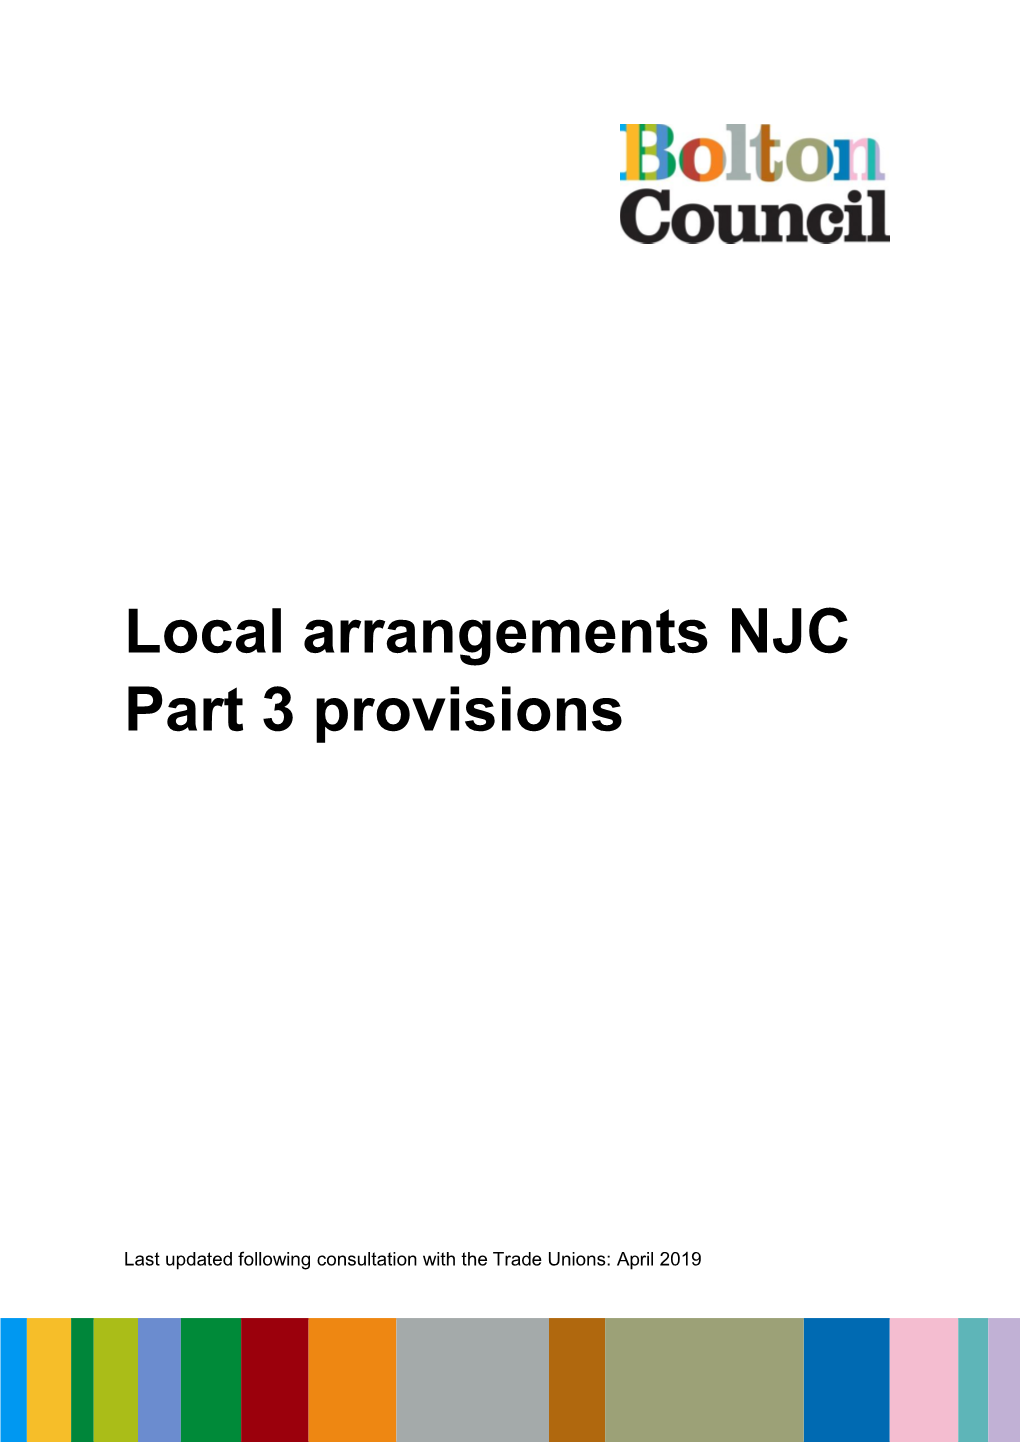 Local Arrangements NJC Part 3 Provisions